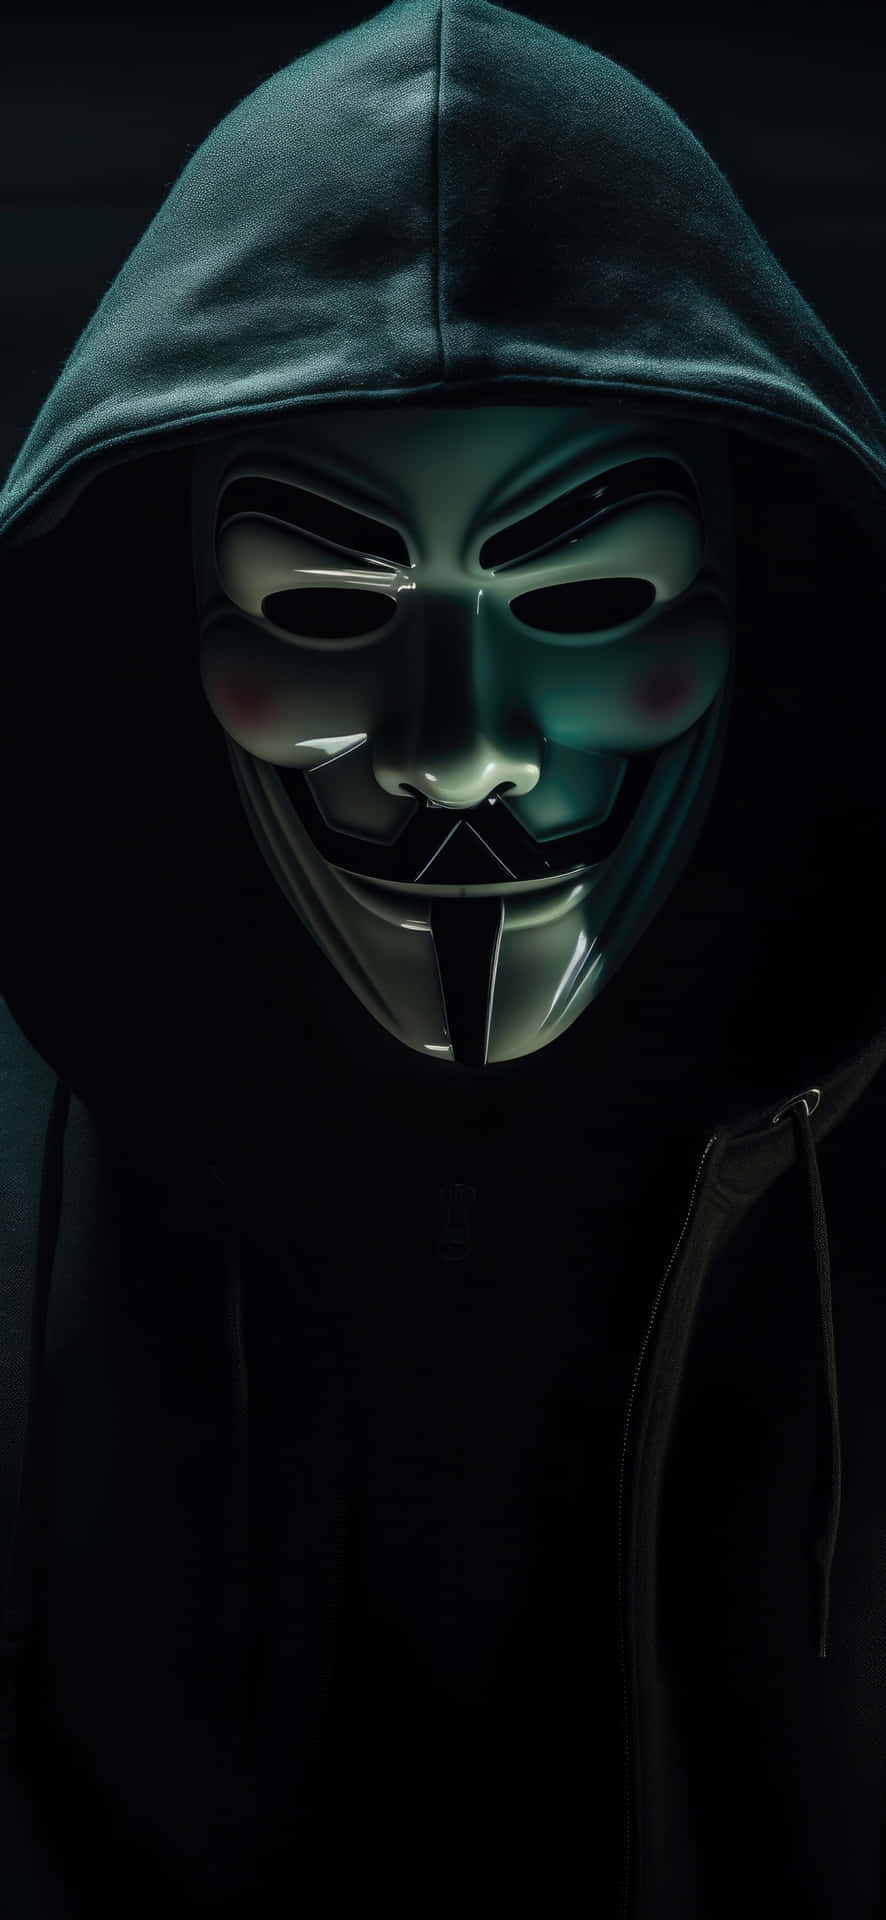 Mysterious_ Hacker_in_ V_for_ Vendetta_ Mask Background